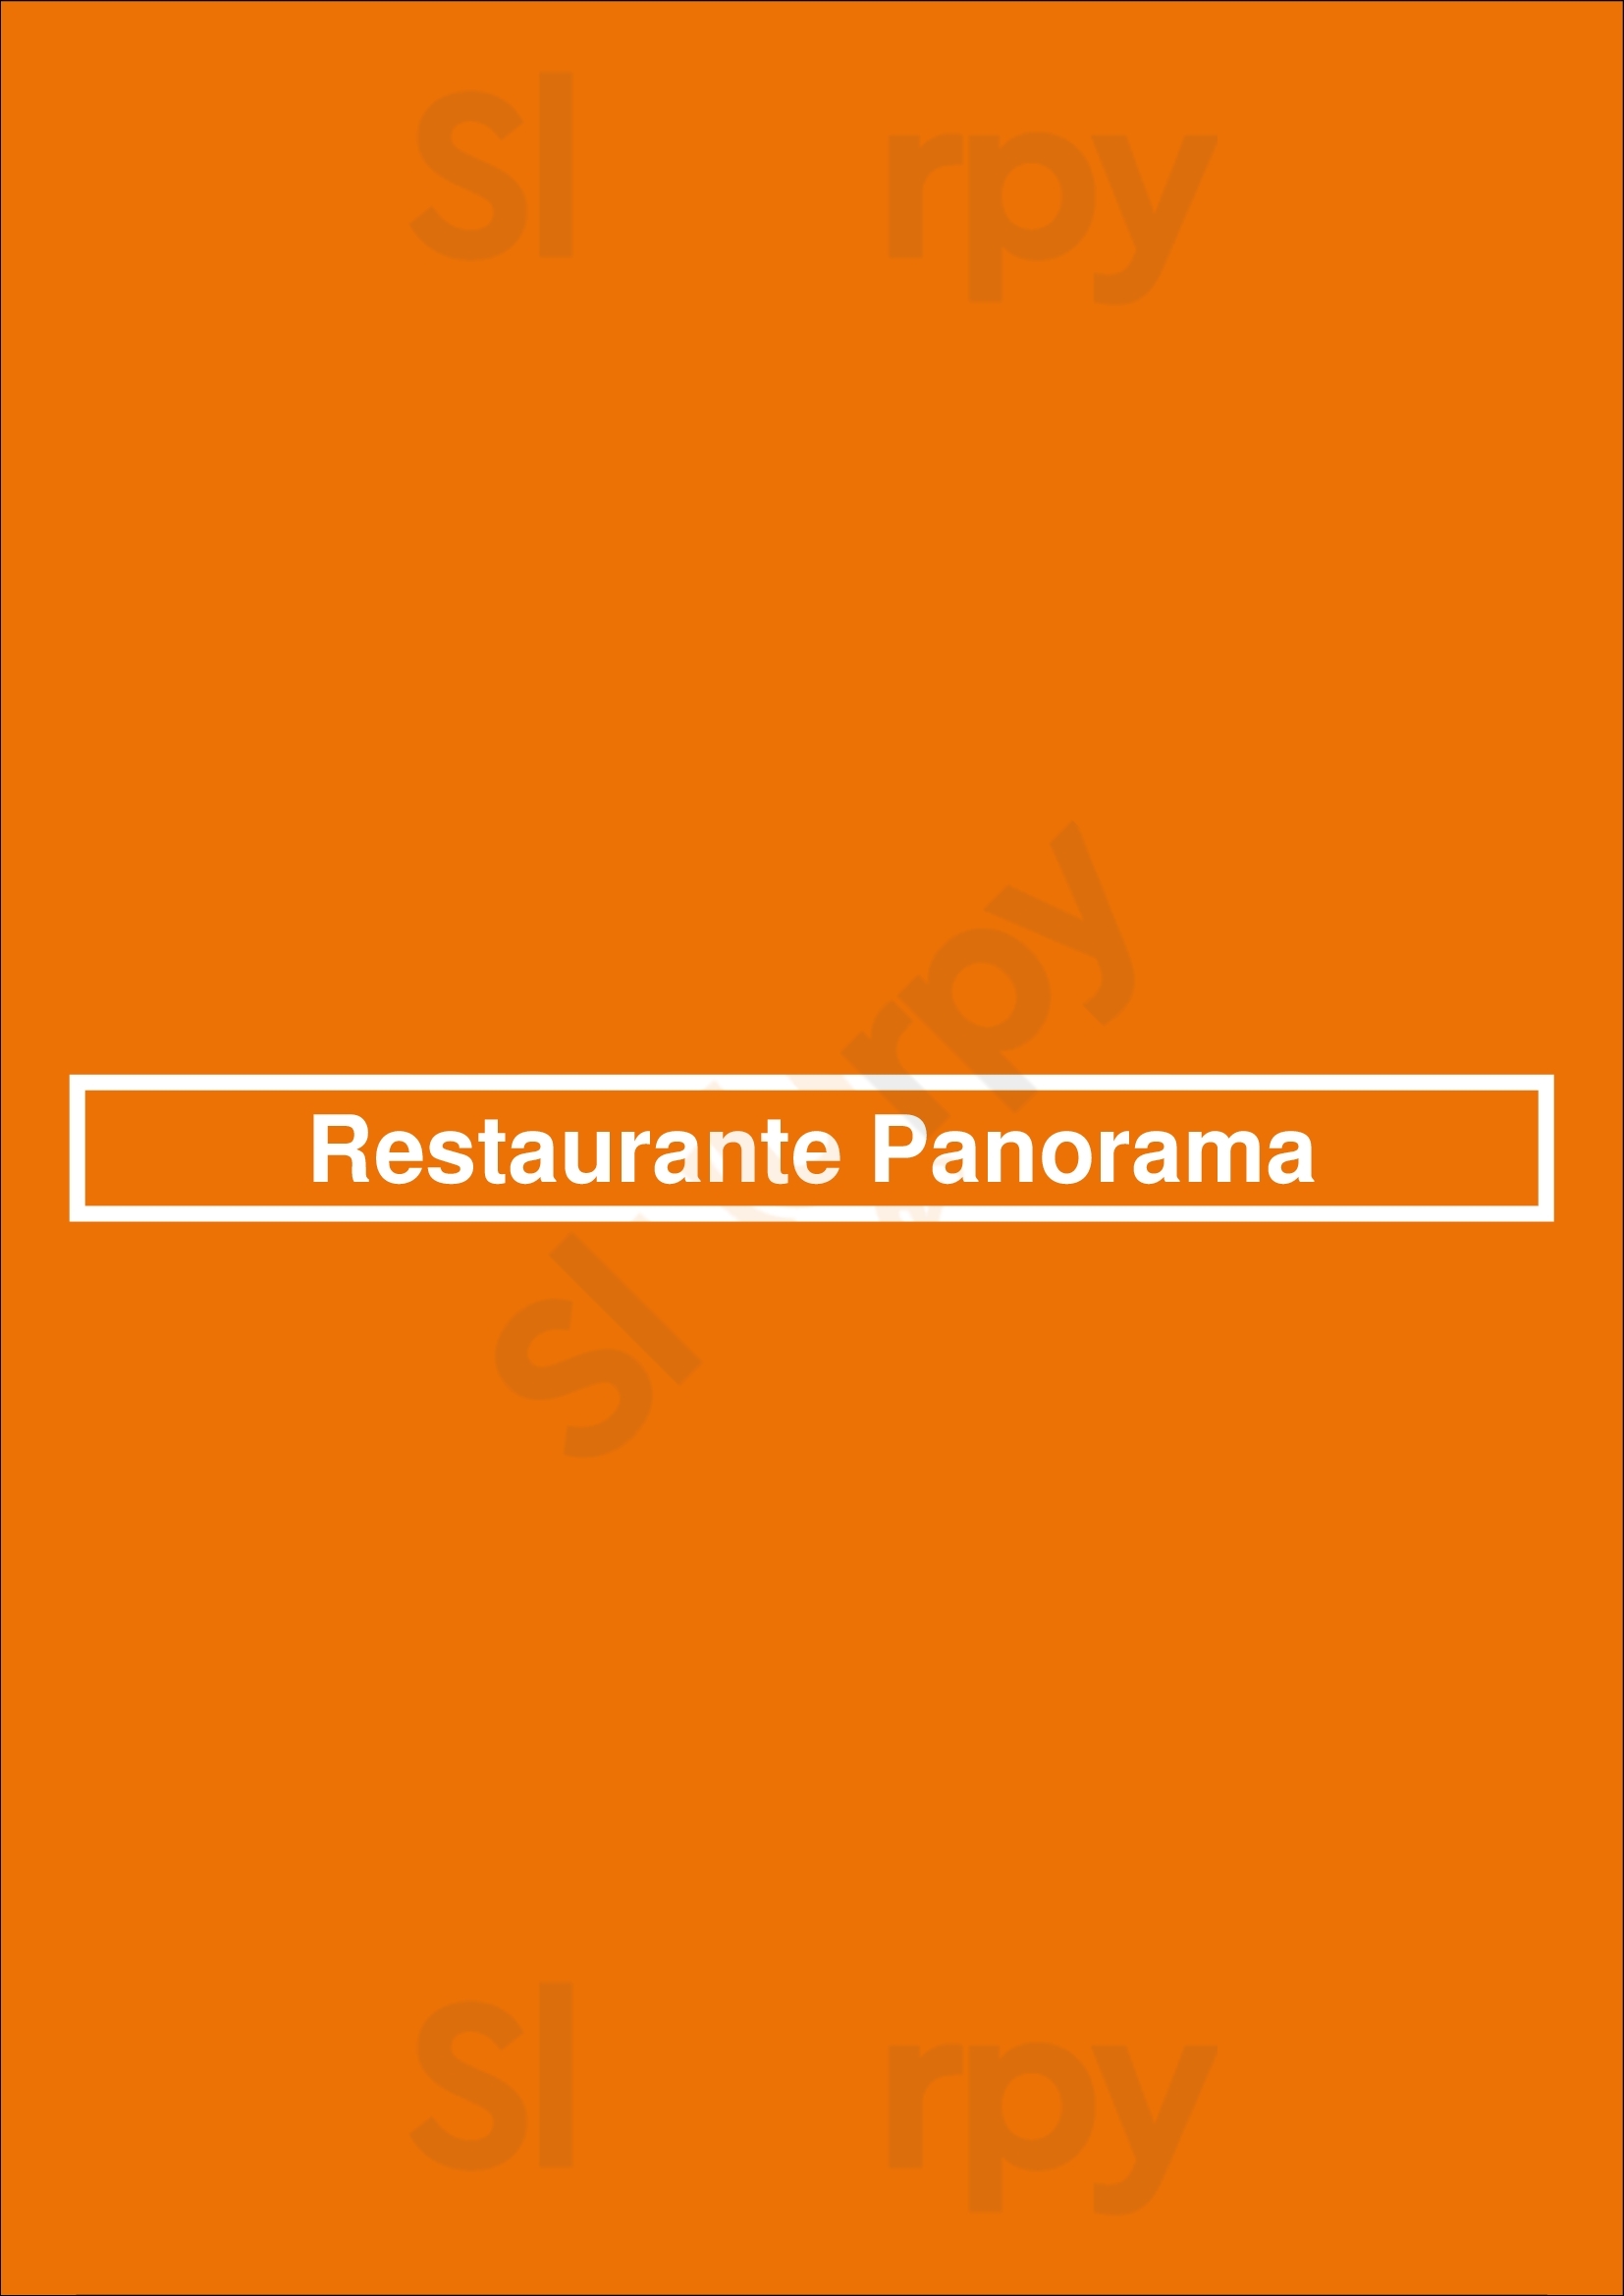 Restaurante Panorama Lisboa Menu - 1